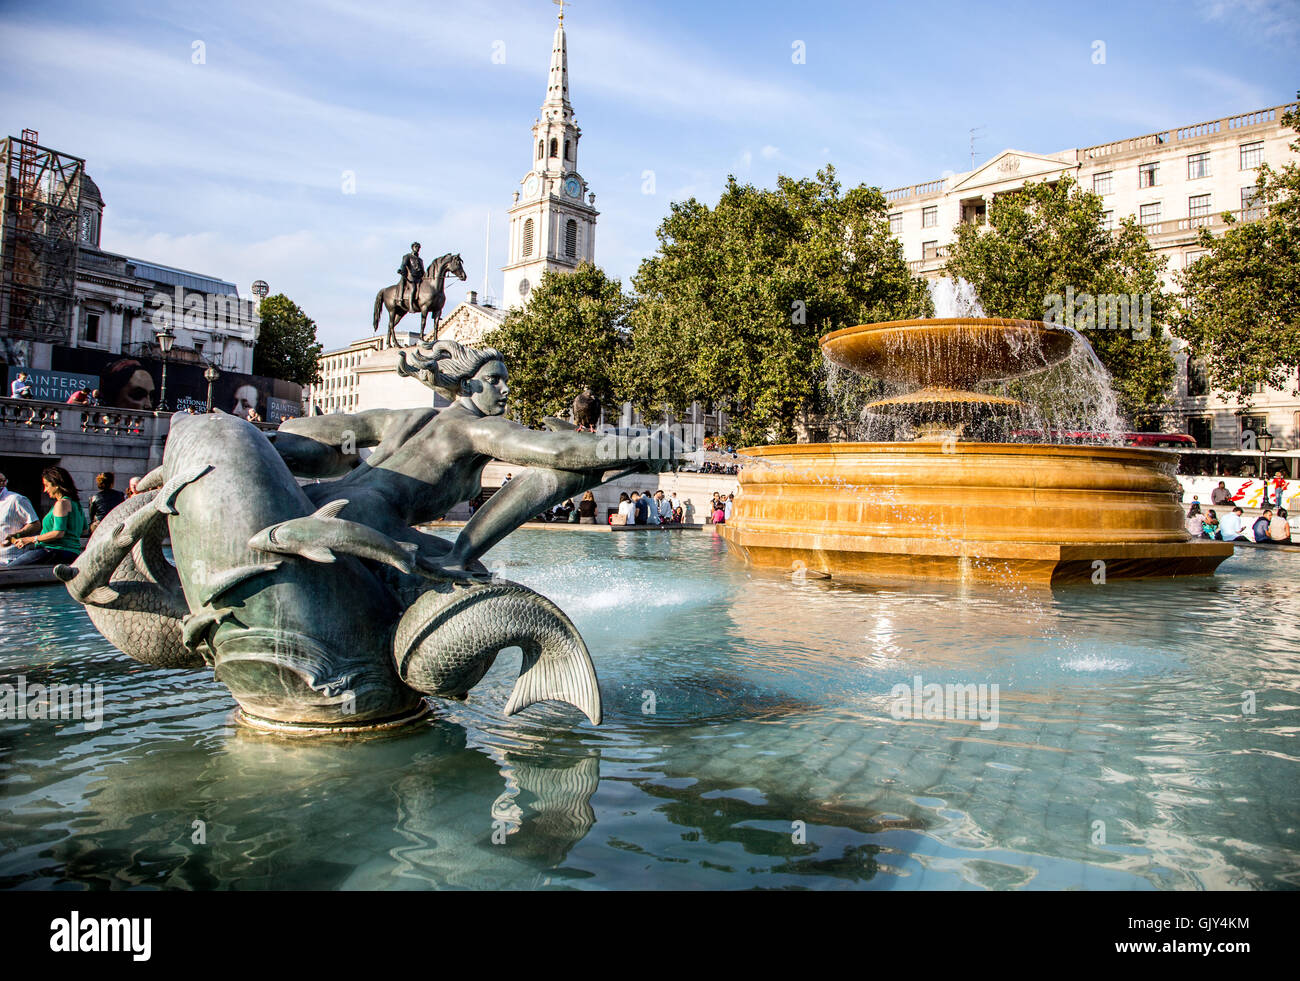 Sculpture and Fountains Trafalgar Square London UK Stock Photo